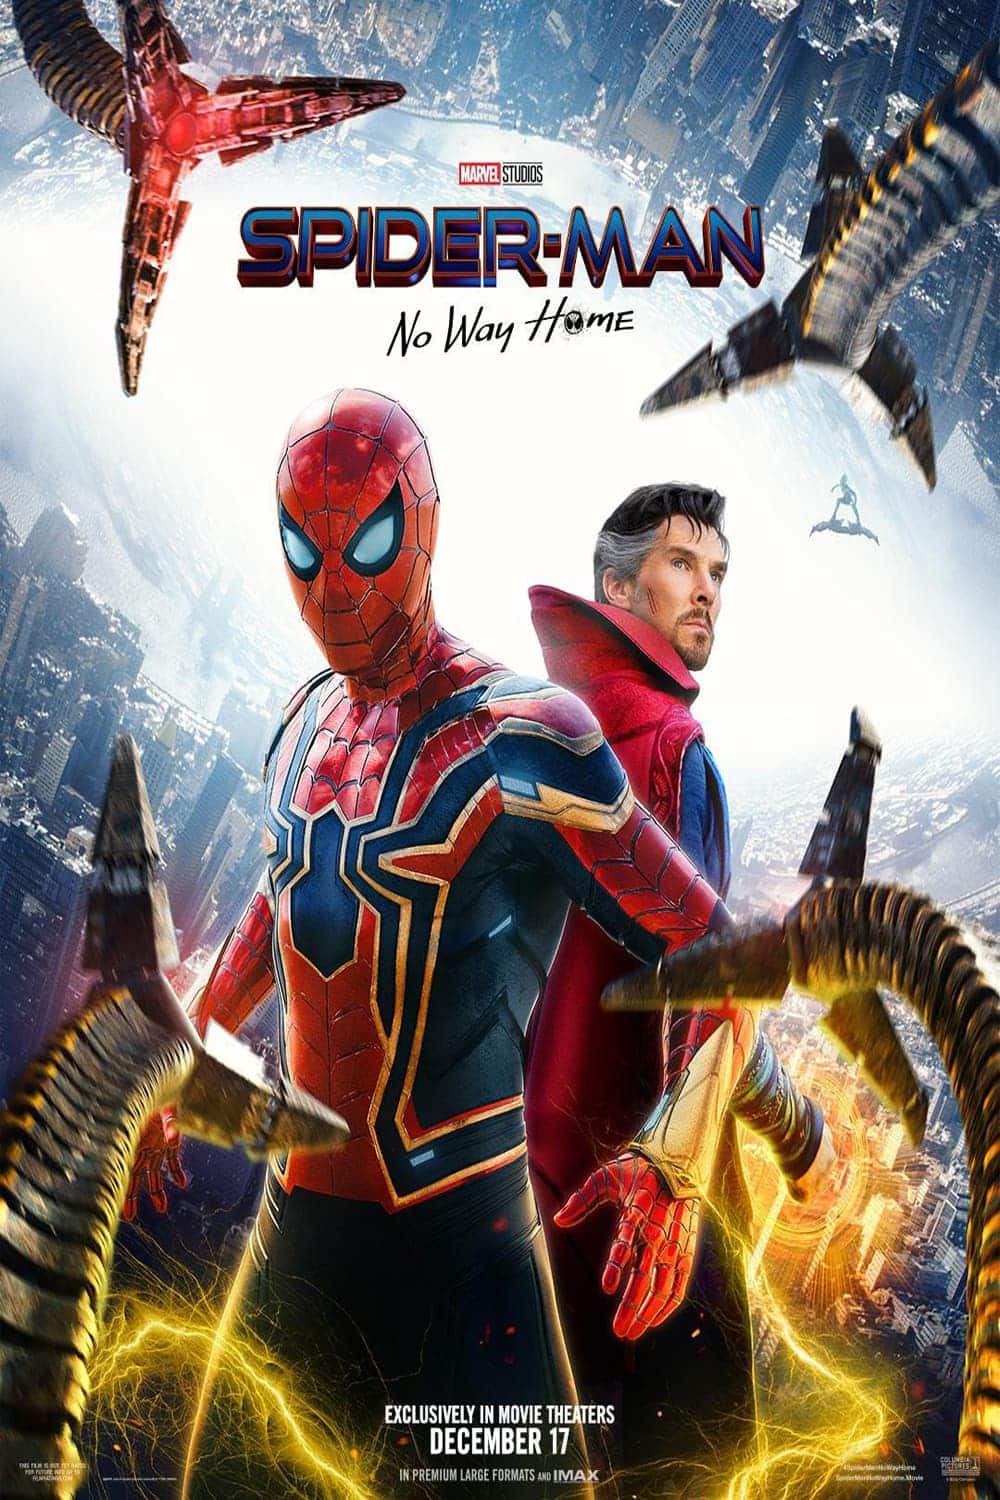 Spider-Man No Way Home review